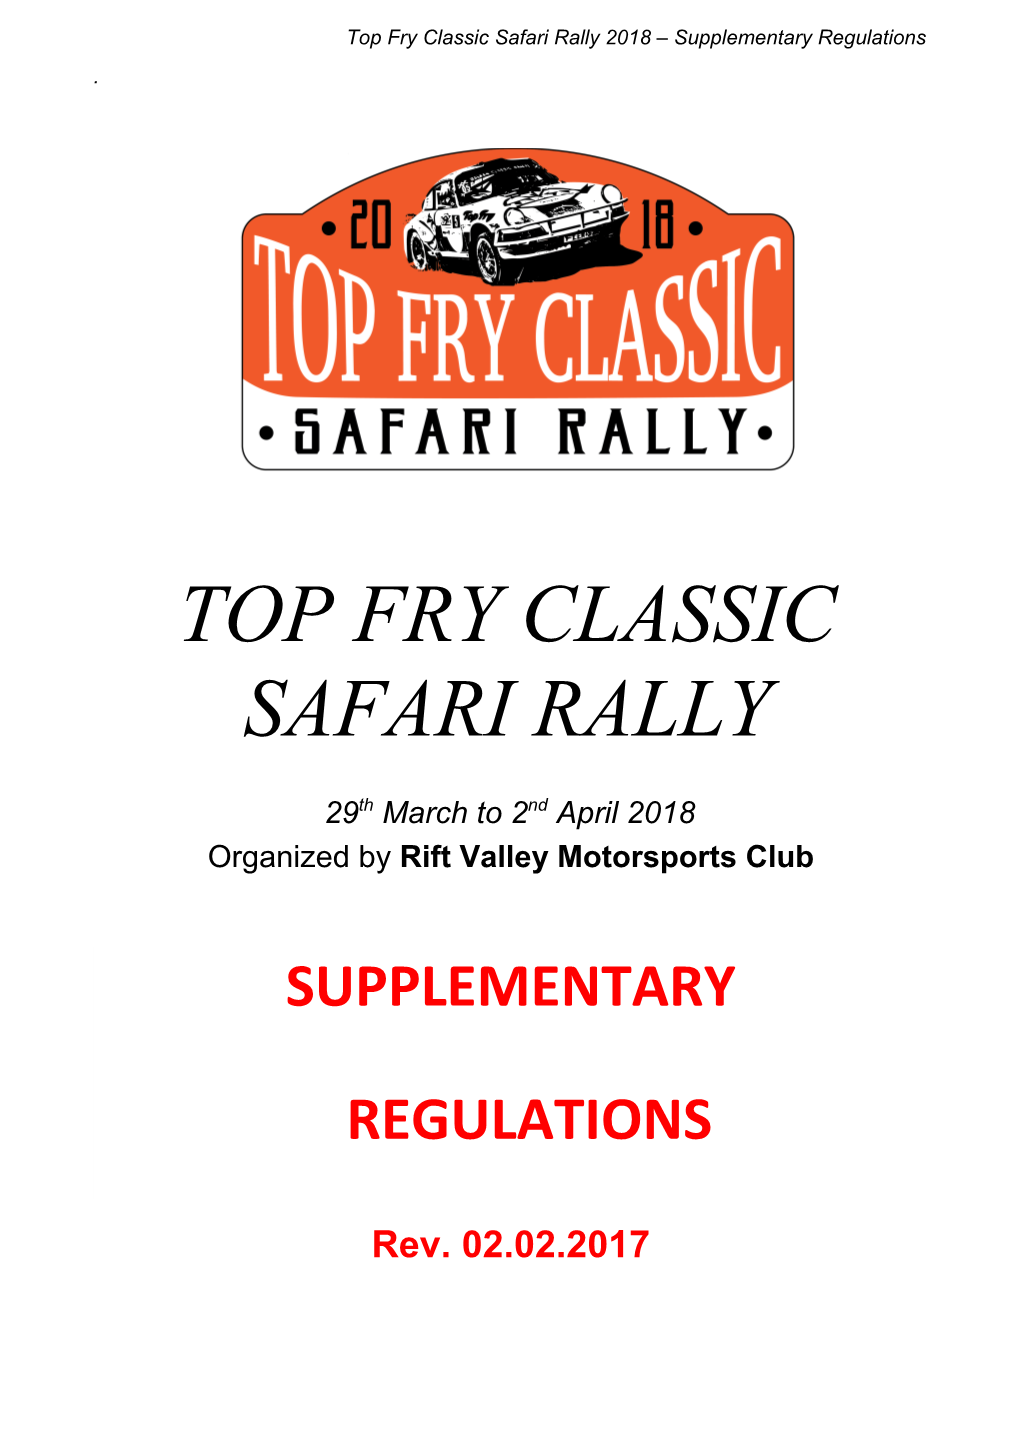 Top Fry Classic Safari Rally 2018 Supplementary Regulations